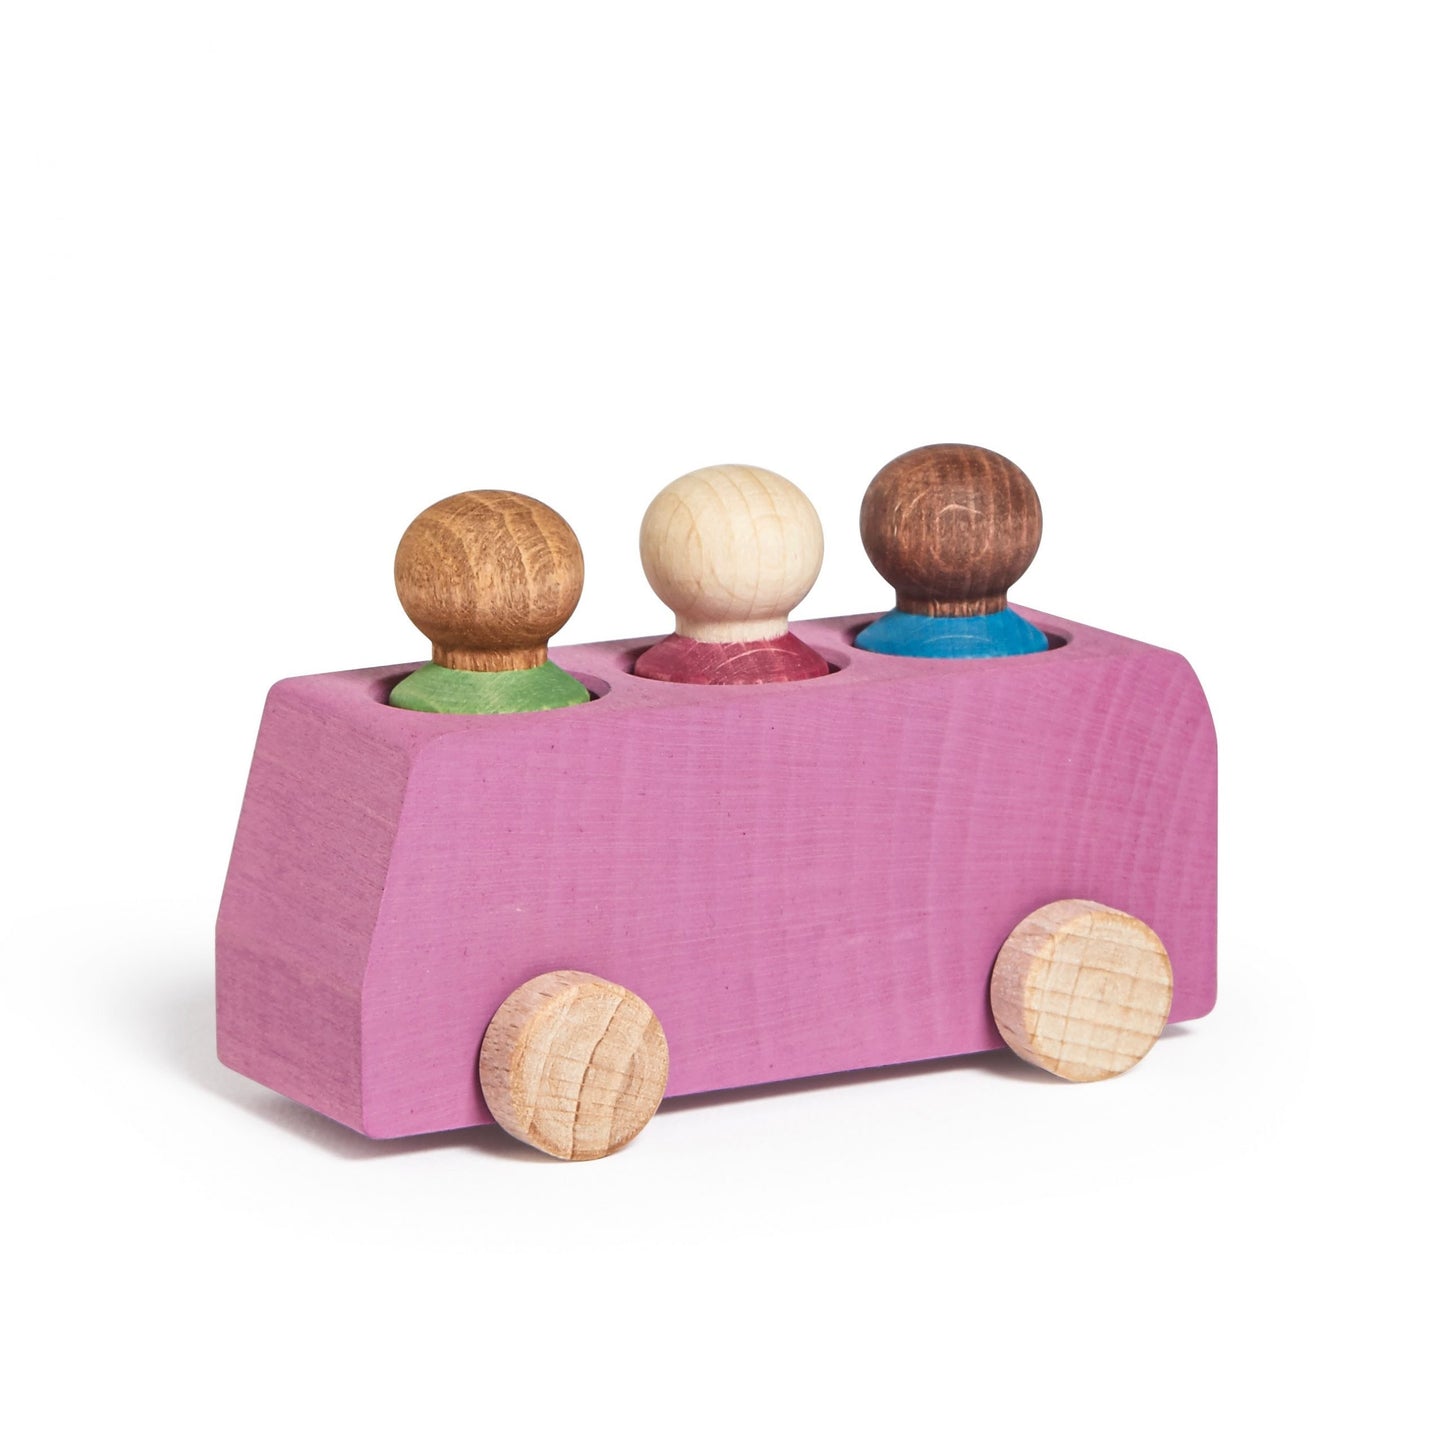 Bus rose Lubulona avec 3 figurines 